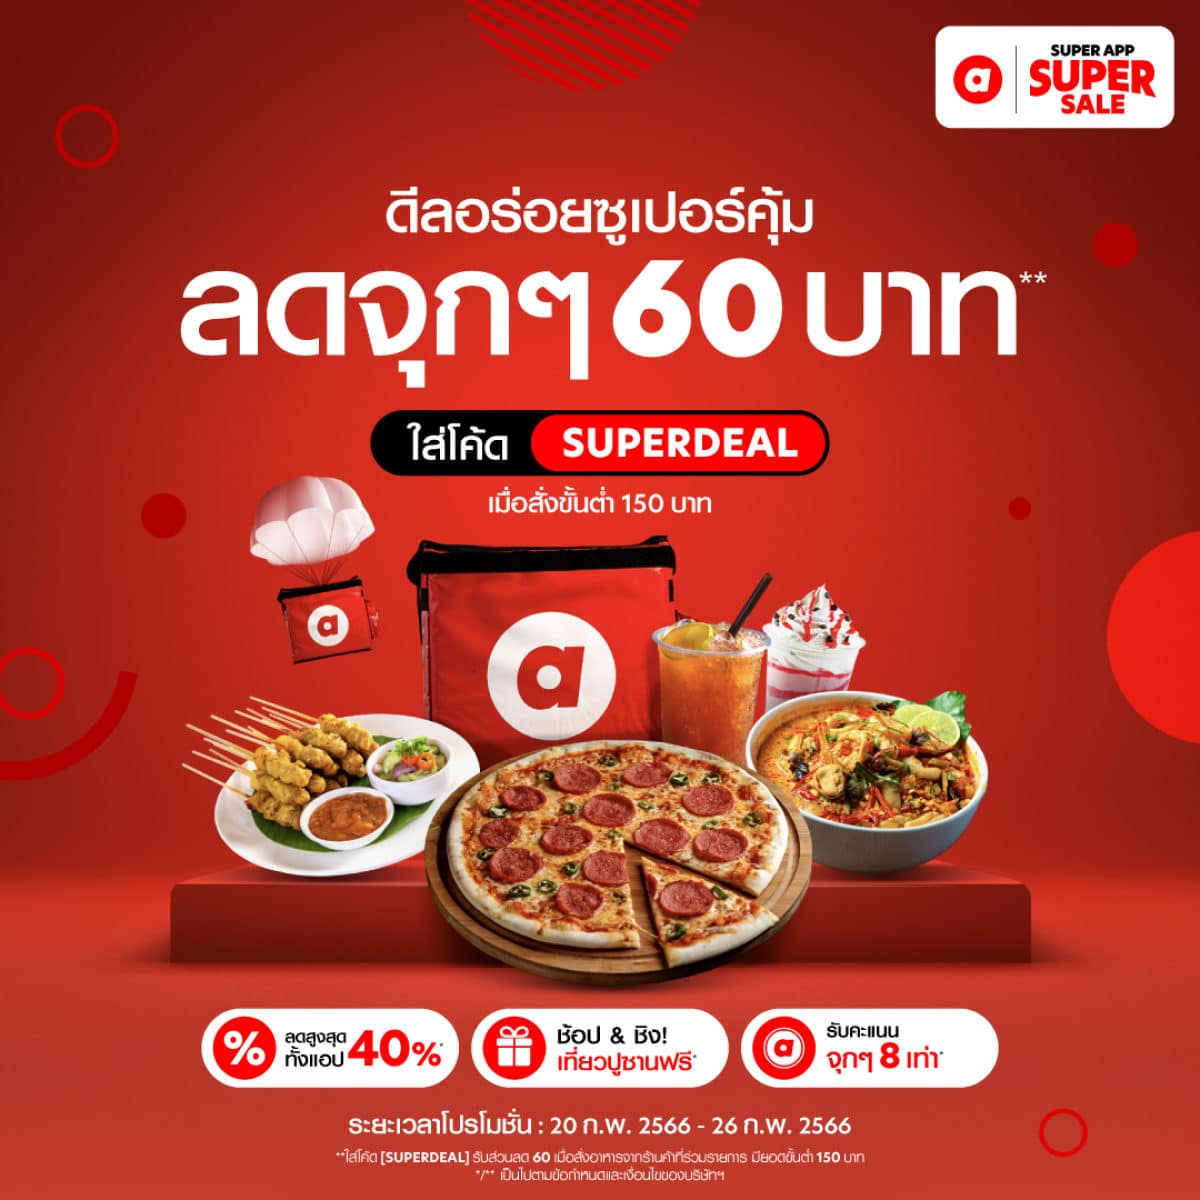 airasia super App Super Sale February 2023 Promotion